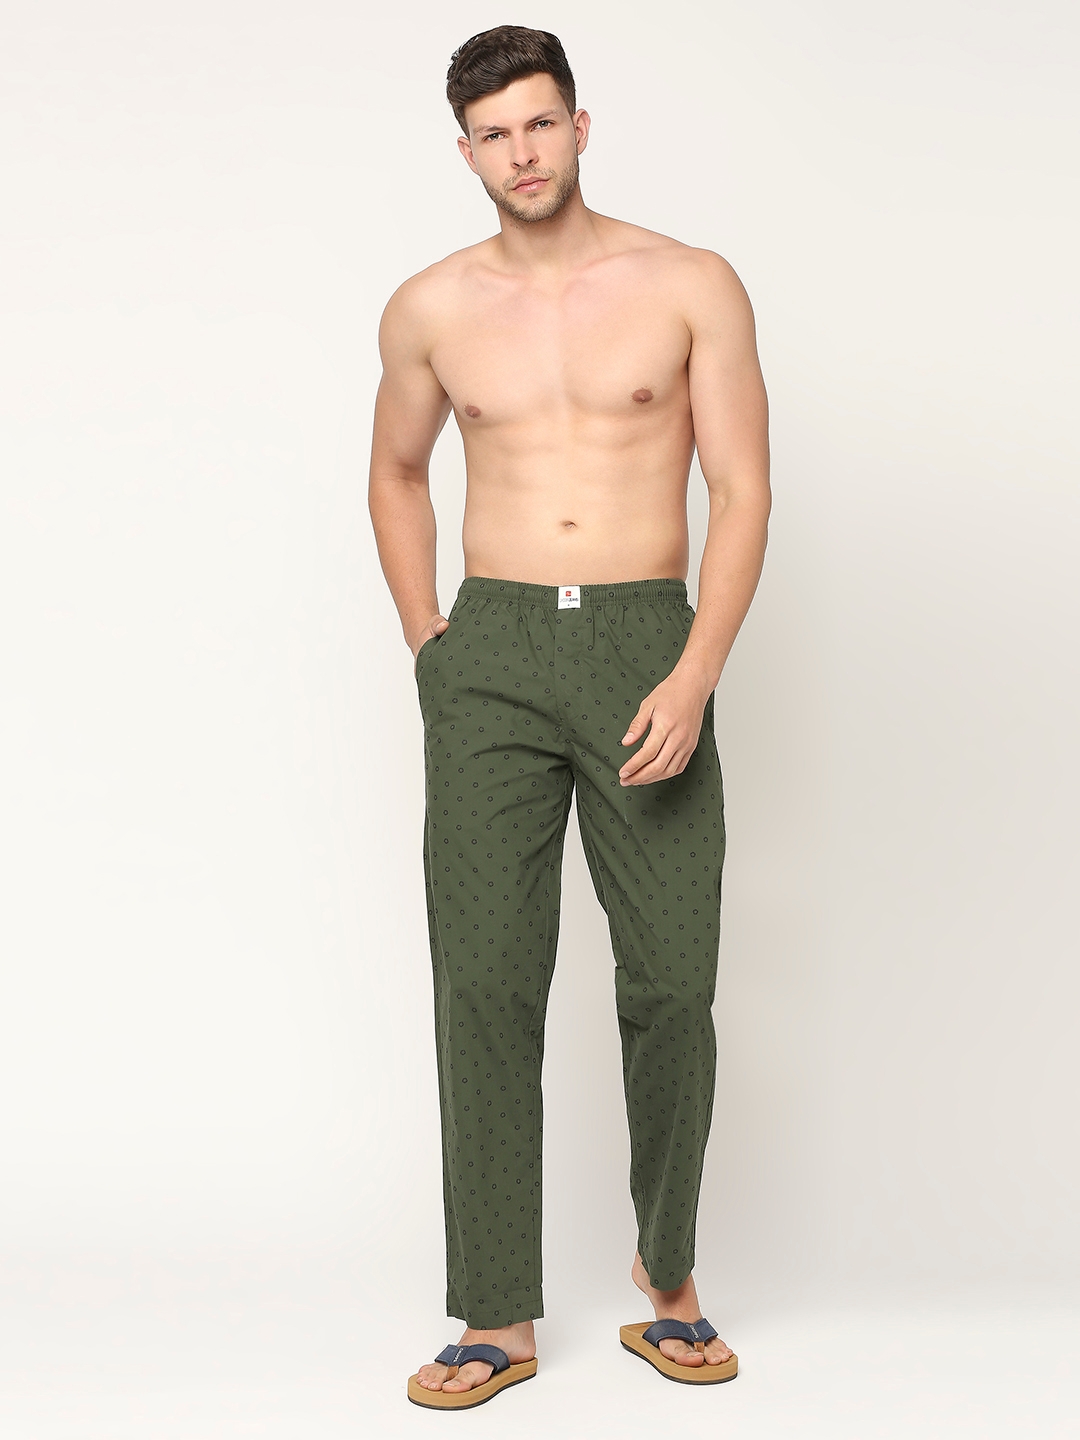 Underjeans by Spykar Premium Cotton Printed Men Bottle Green Pyjama